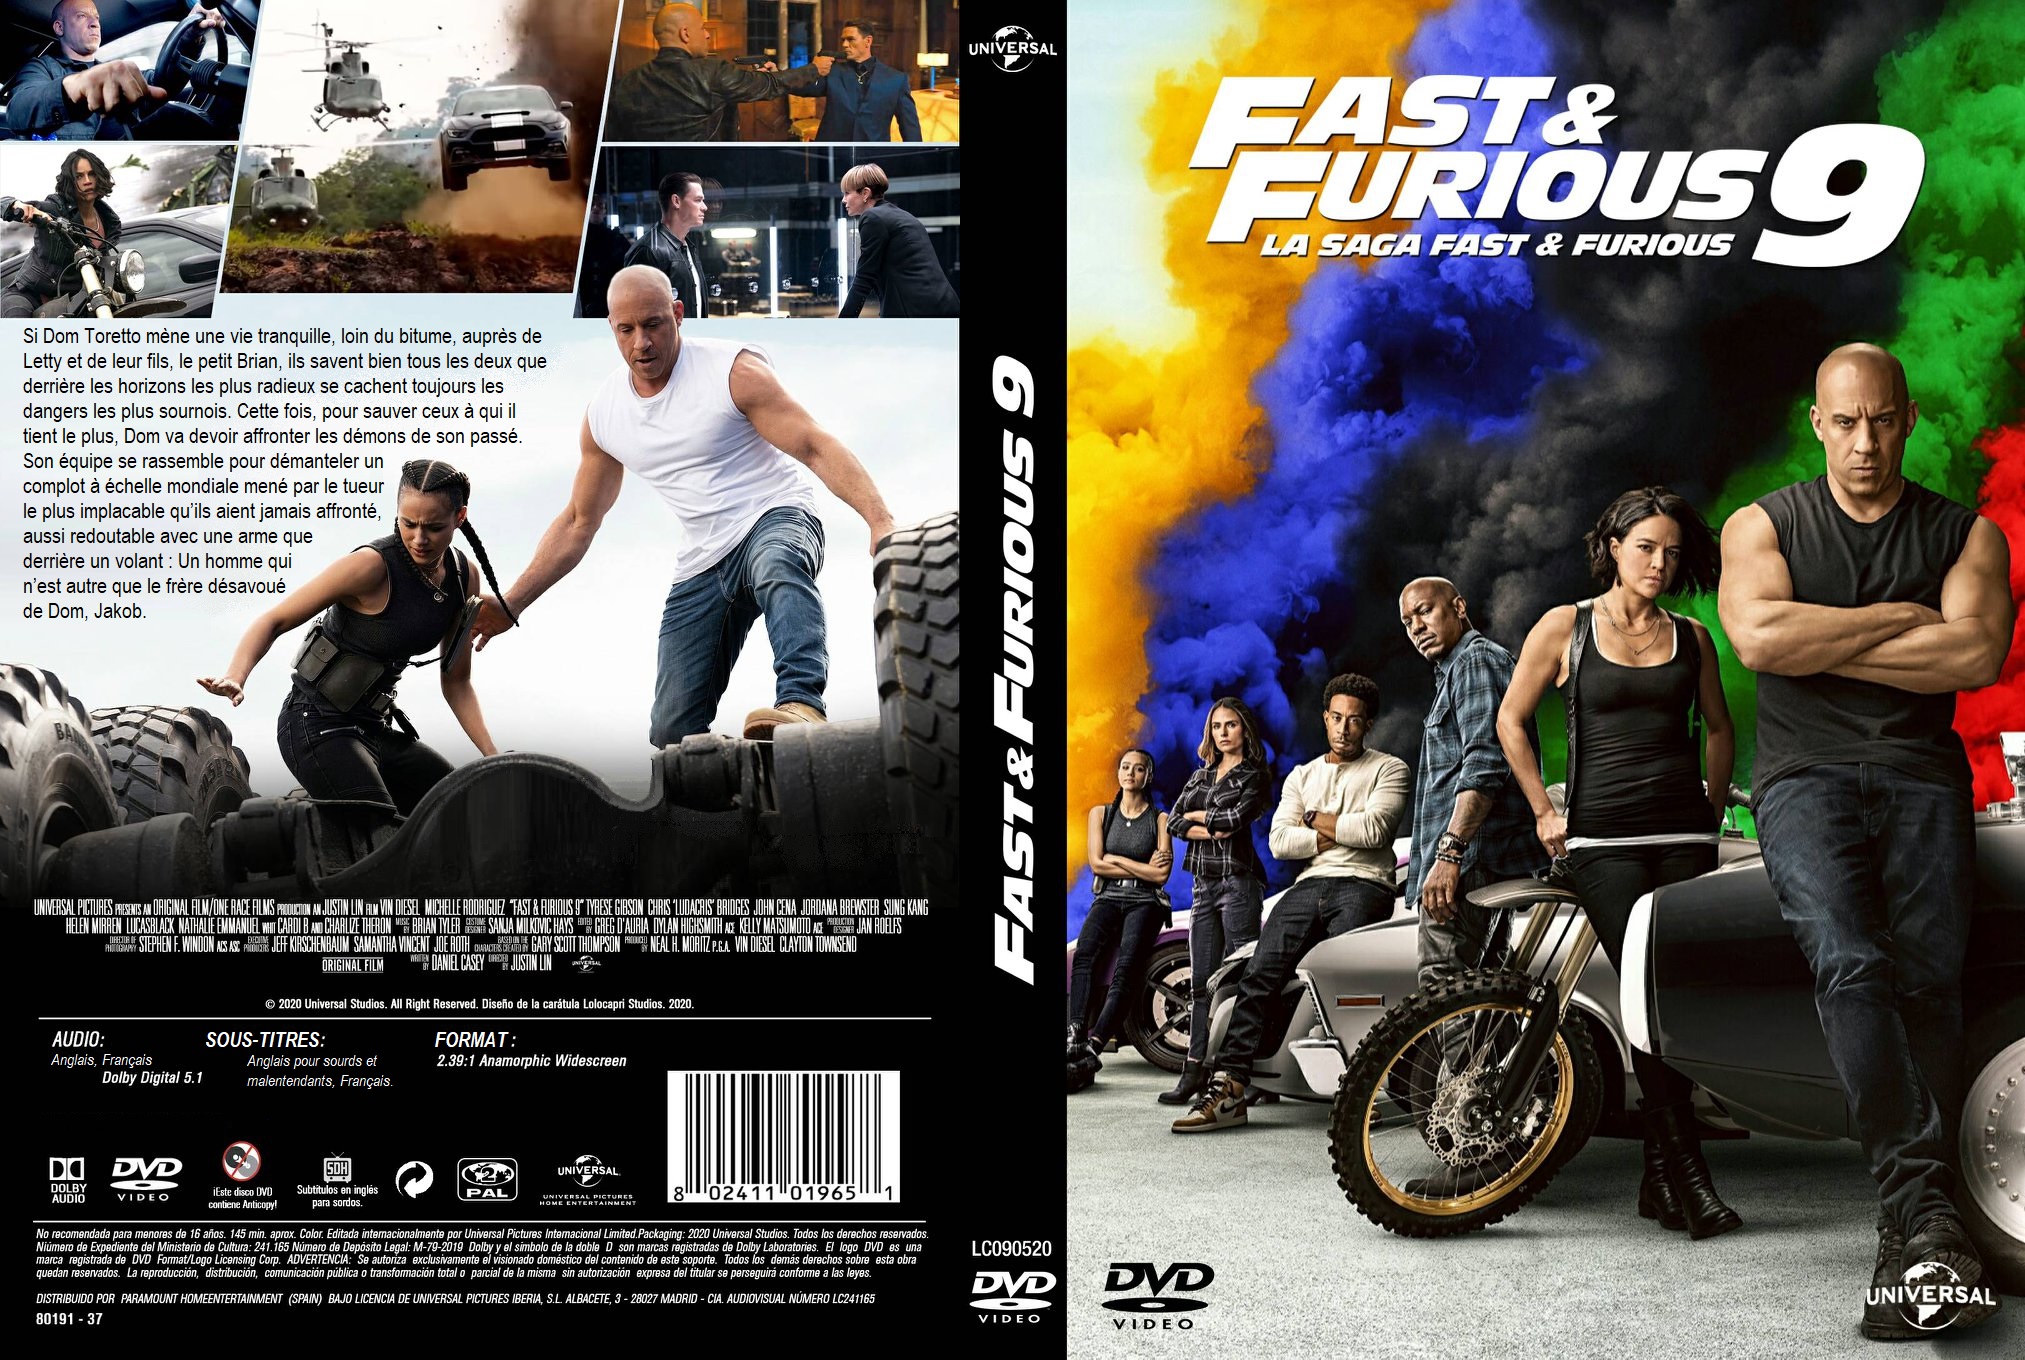 Jaquette DVD Fast & Furious 9 custom v2